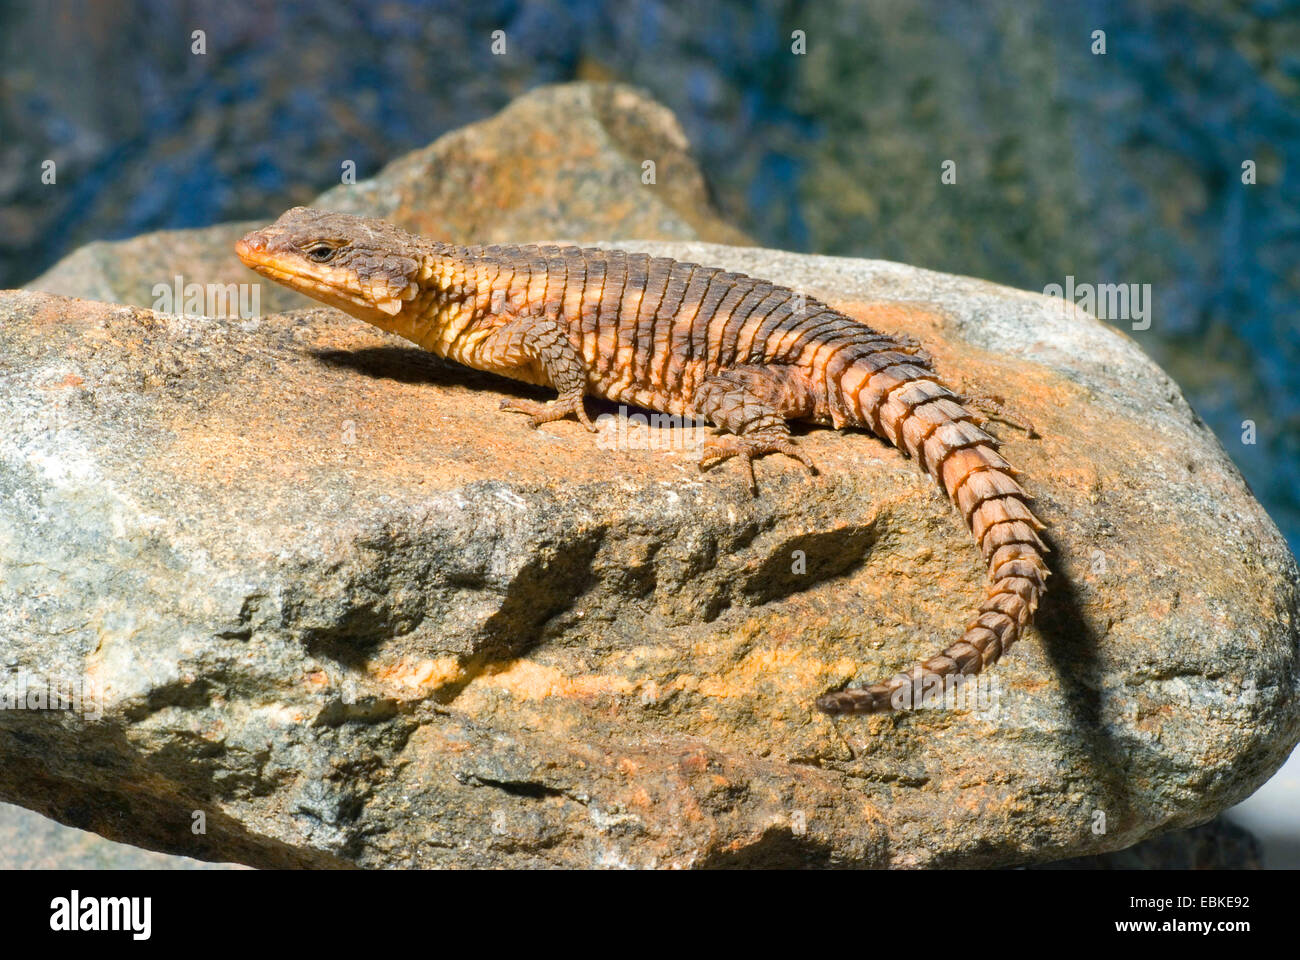 East African spiny-tailed lizard, Tropical girdled lizard (Cordylus tropidosternum), on a stone Stock Photo